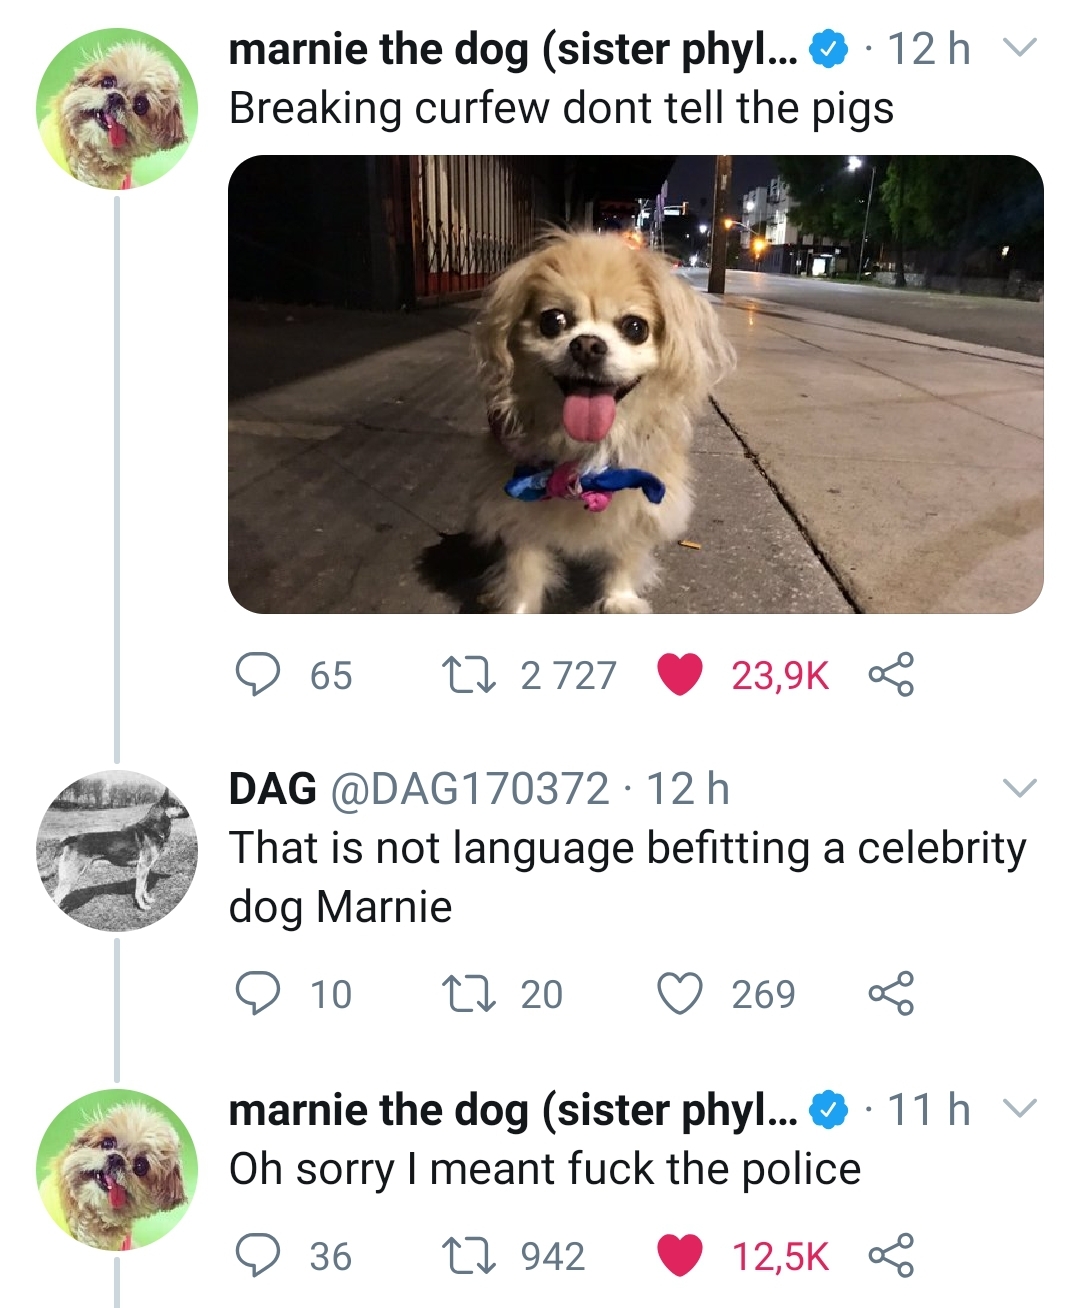 marnie is sending an message.